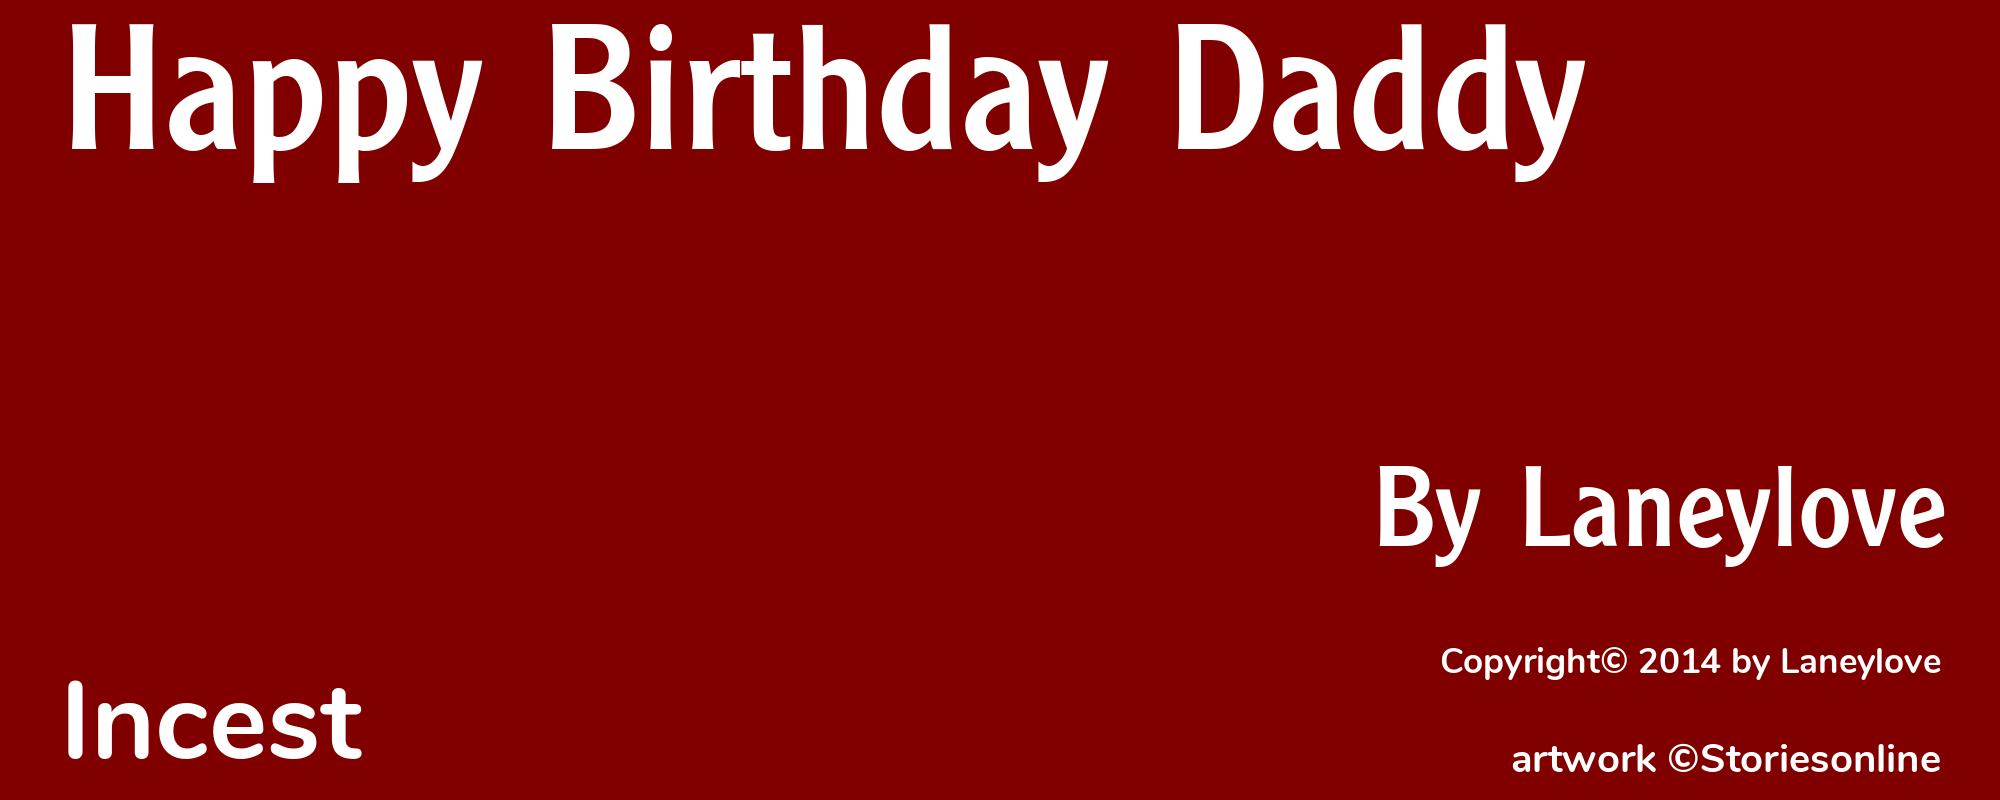 Happy Birthday Daddy - Cover